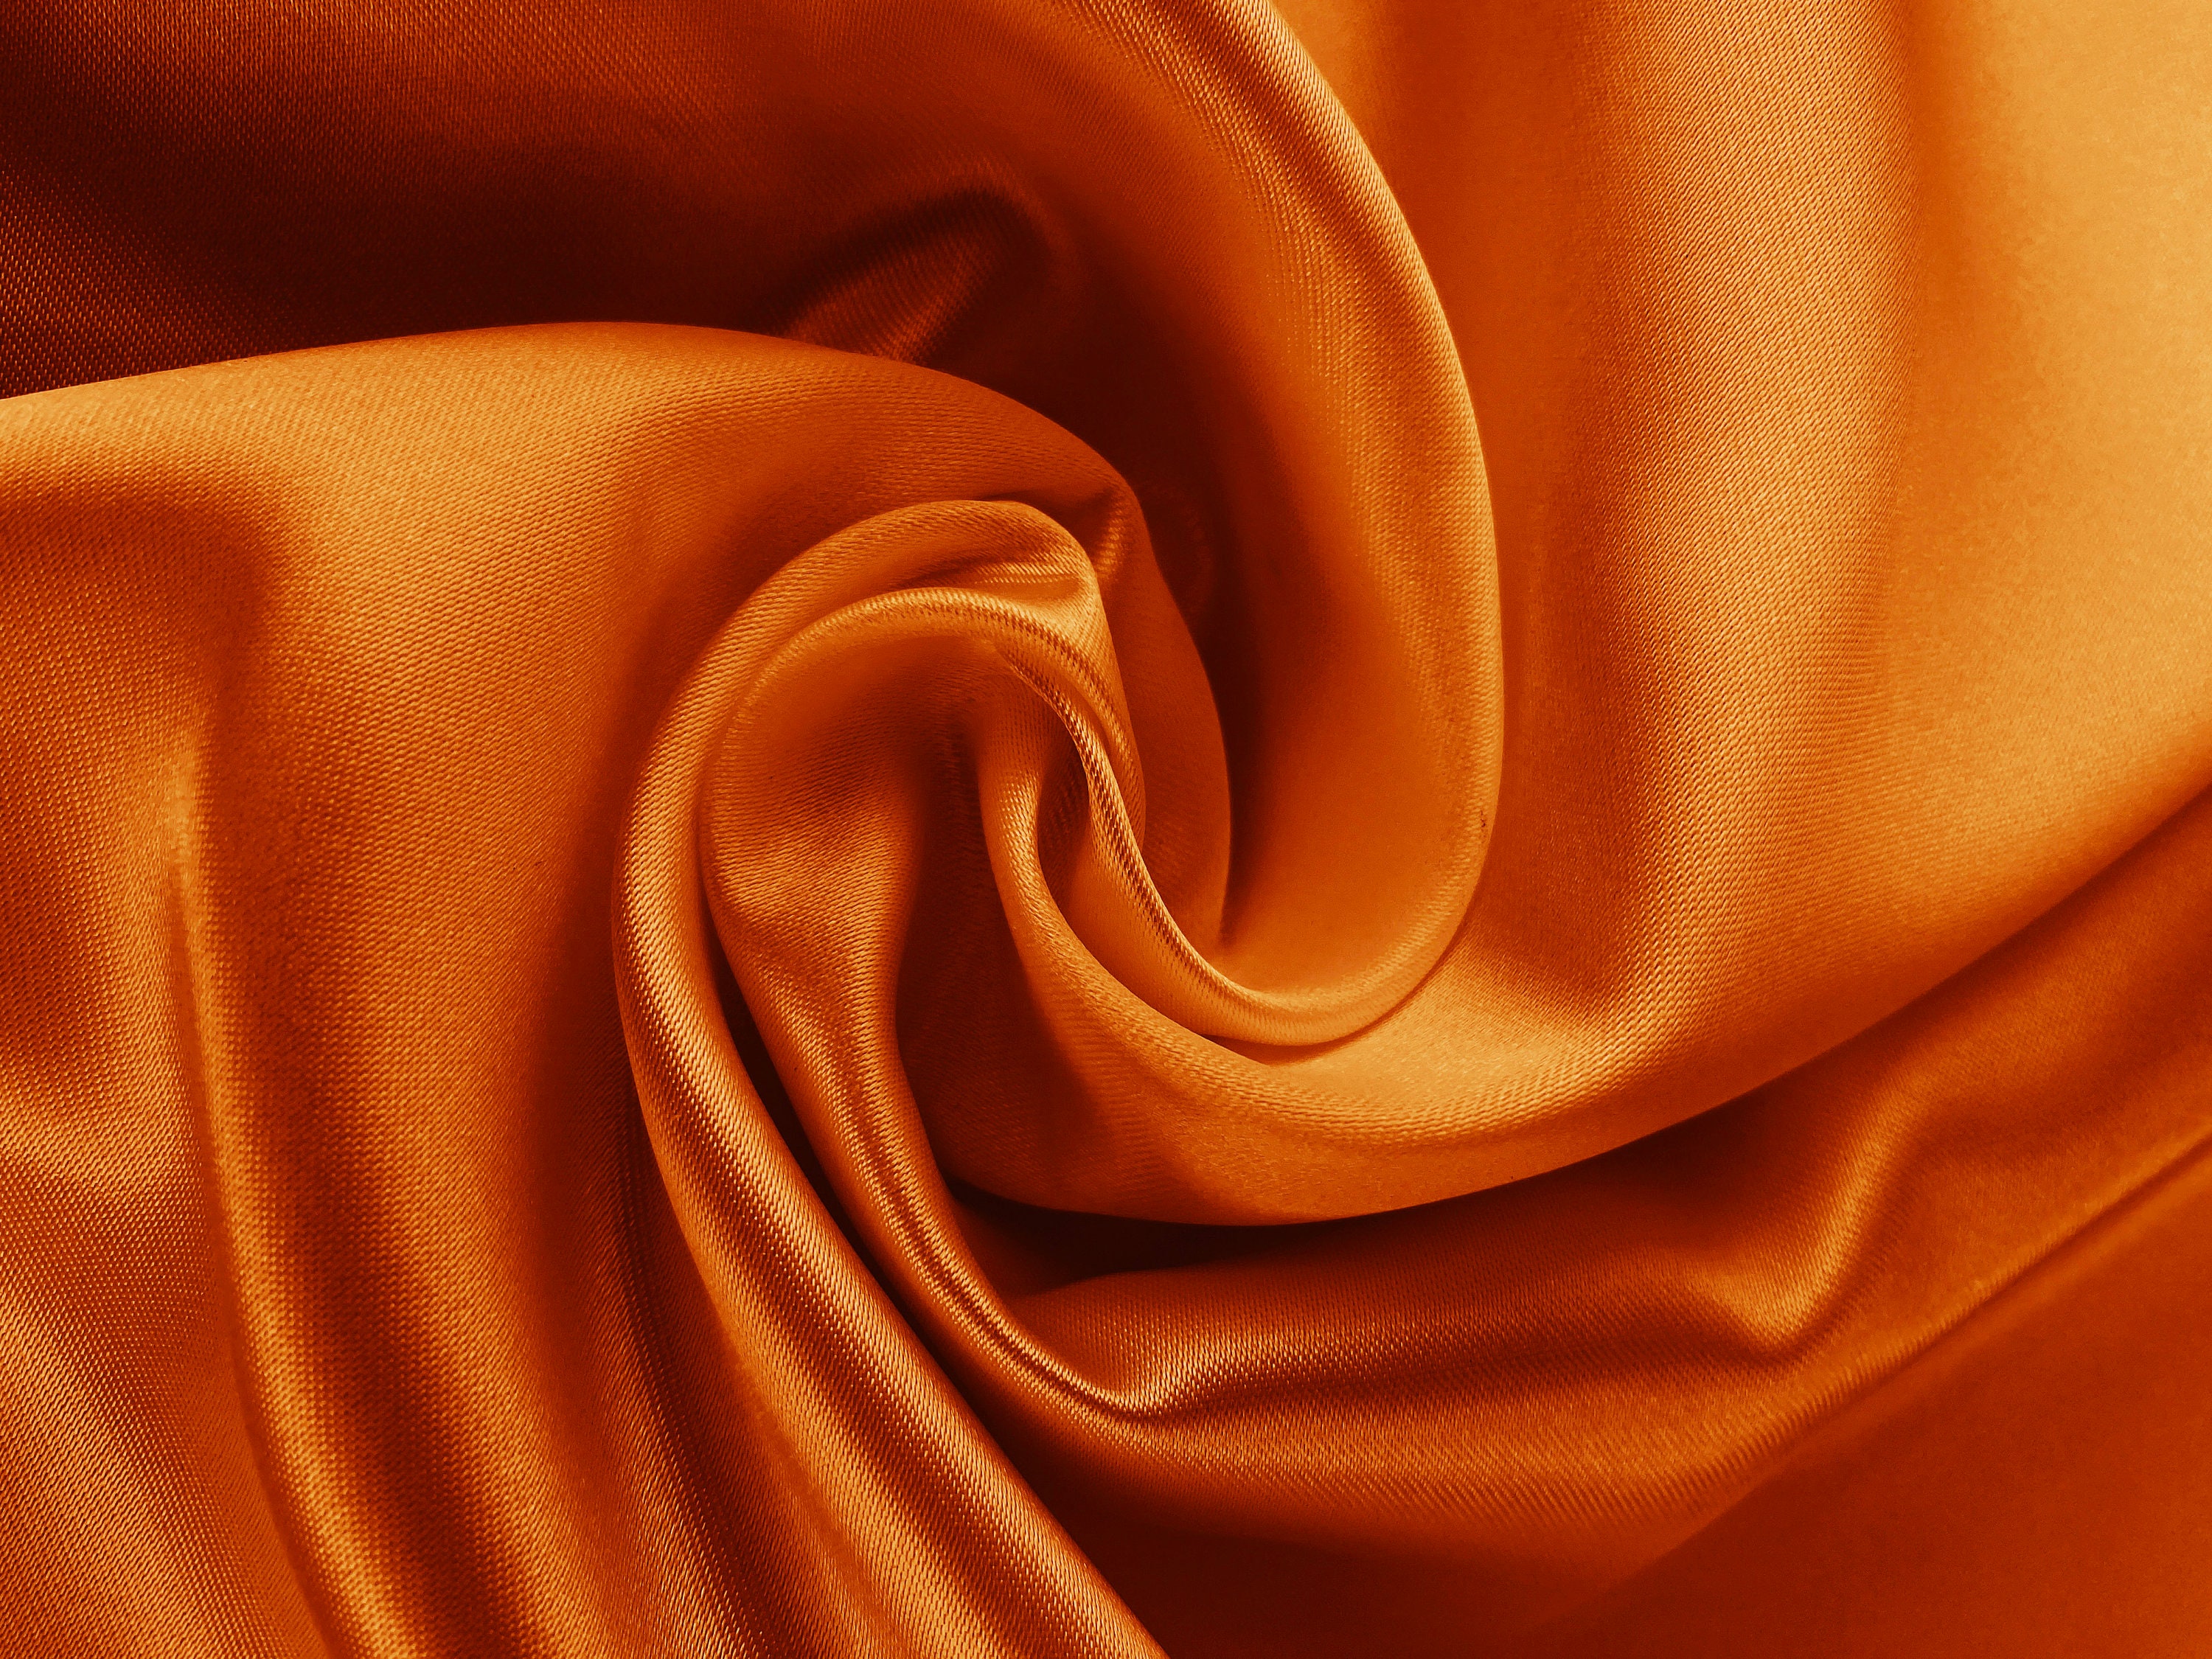 Orange Satin Fabric 60 Inch Wide by The Yard